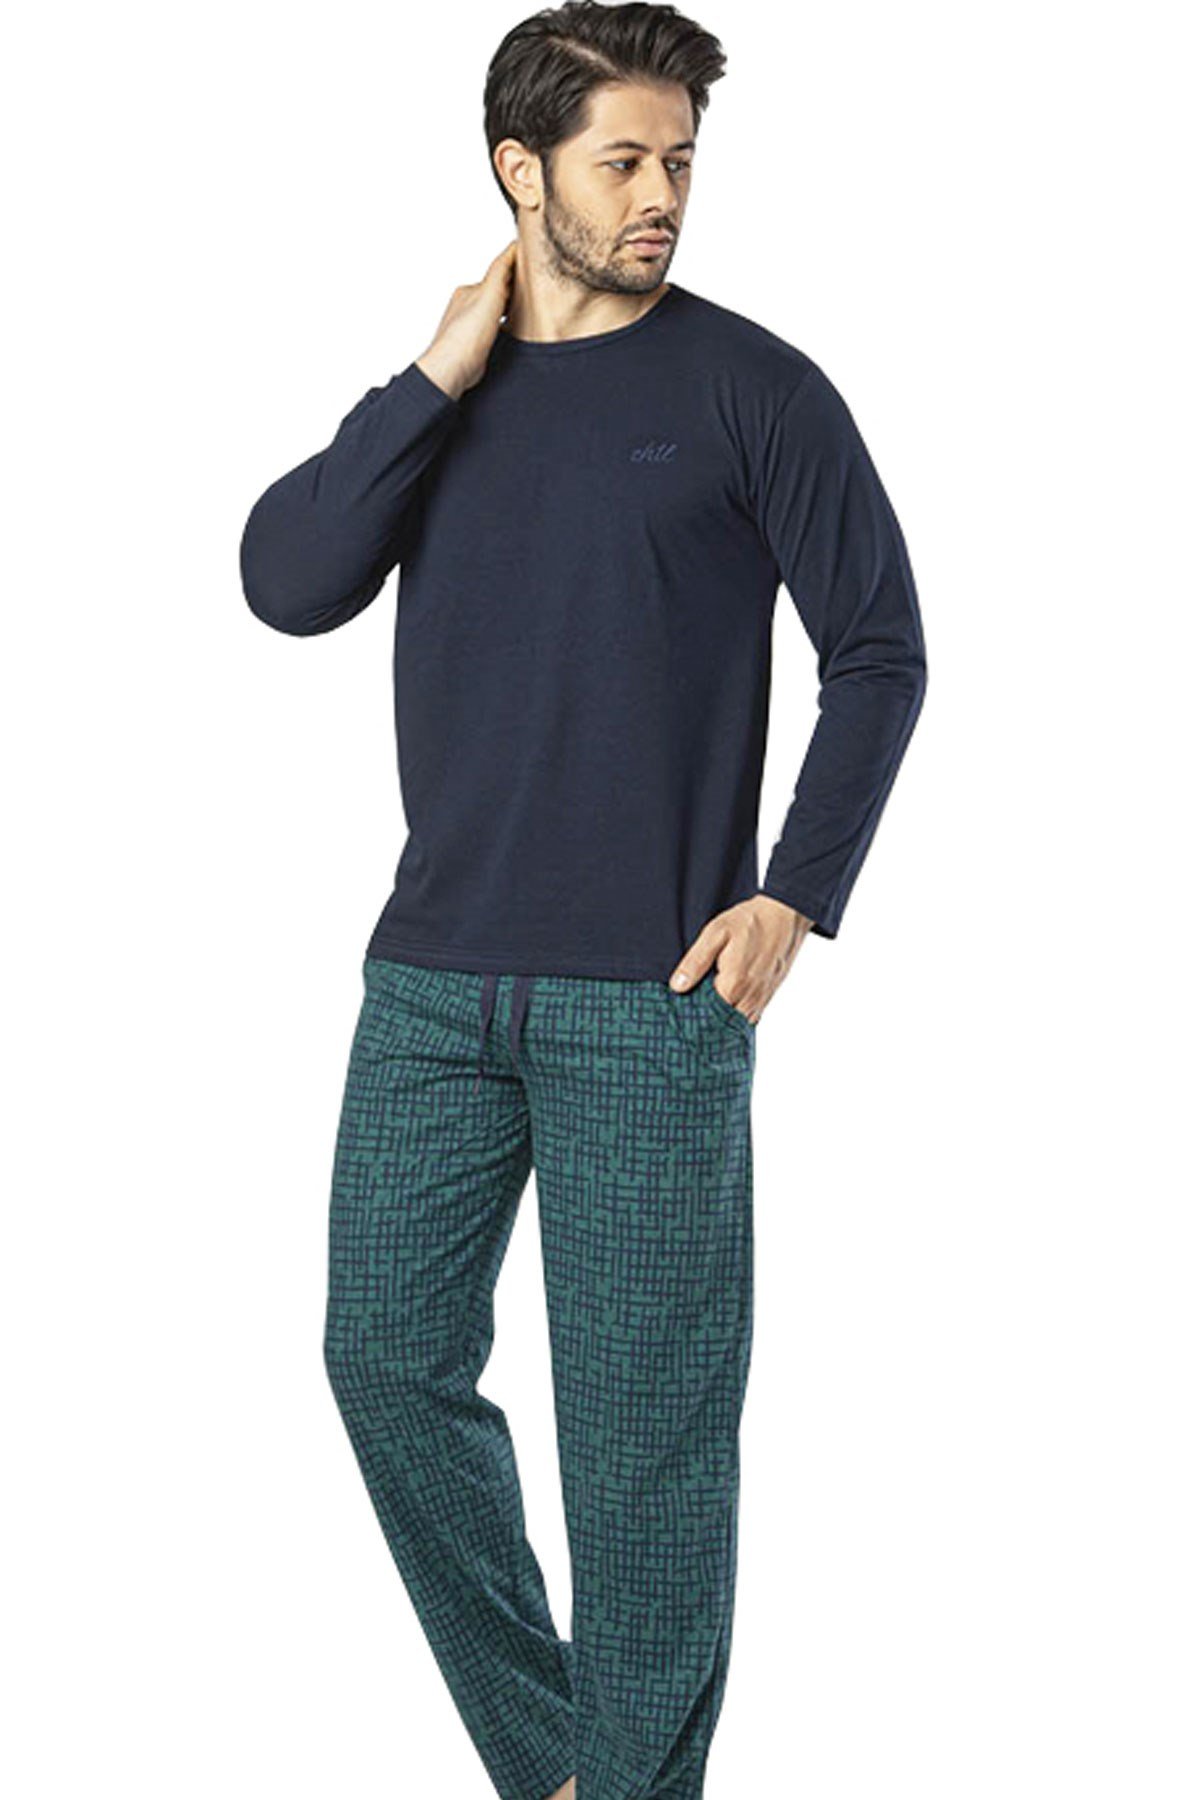 Akare Erkek Pamuklu ve Likralı Pijama Takımı